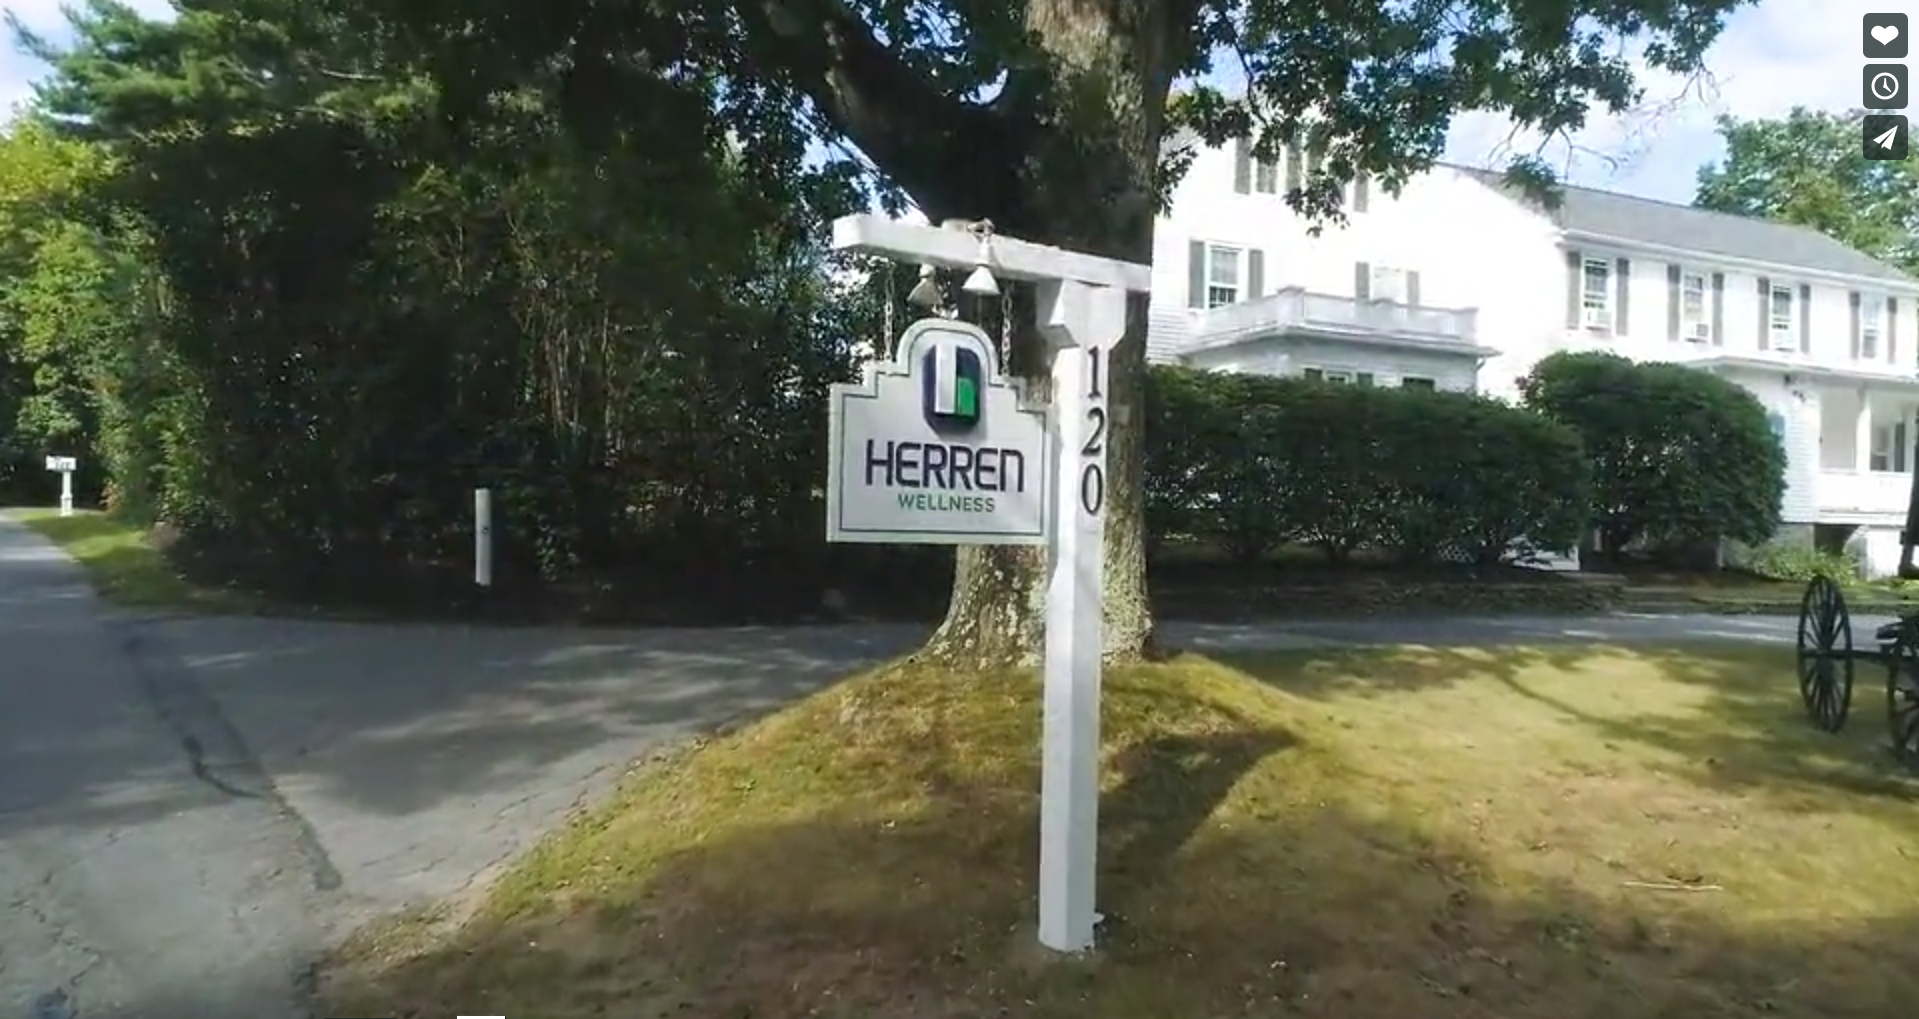 herren wellness addiction treatment holistic recovery residential